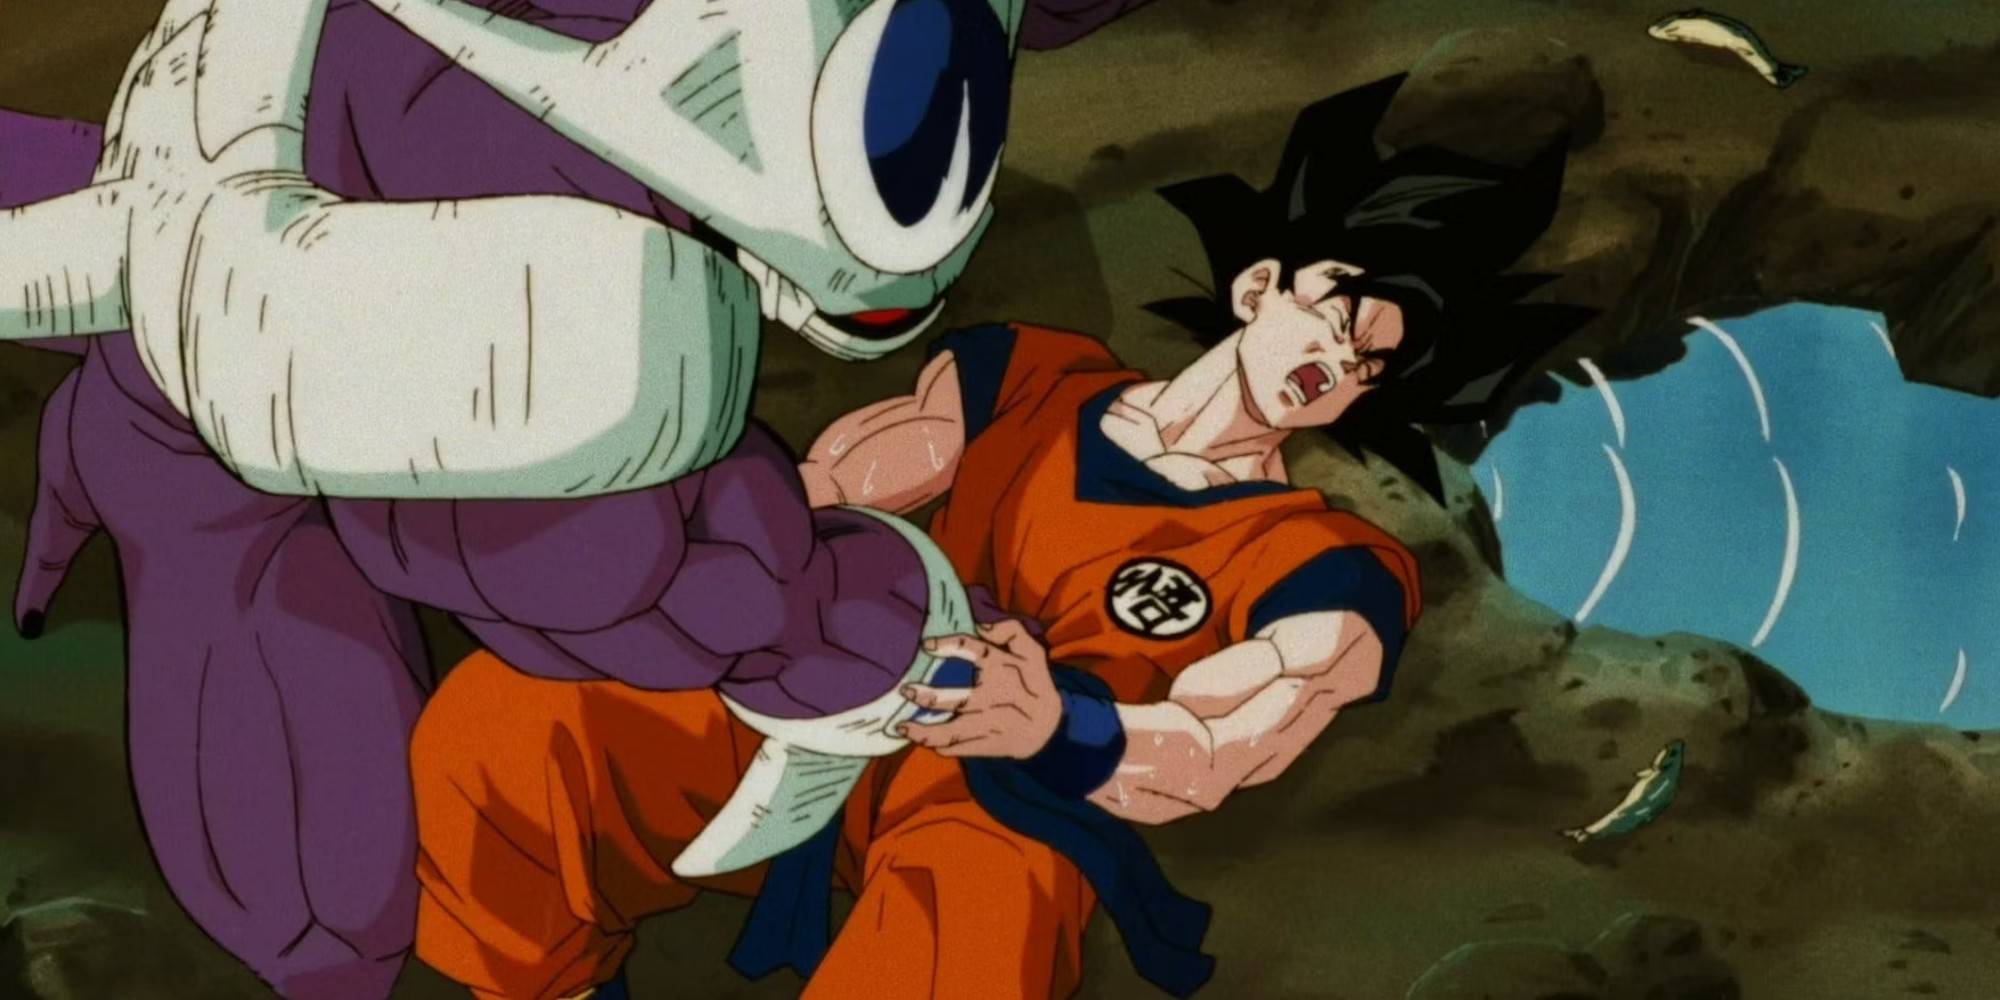 Goku gut punch